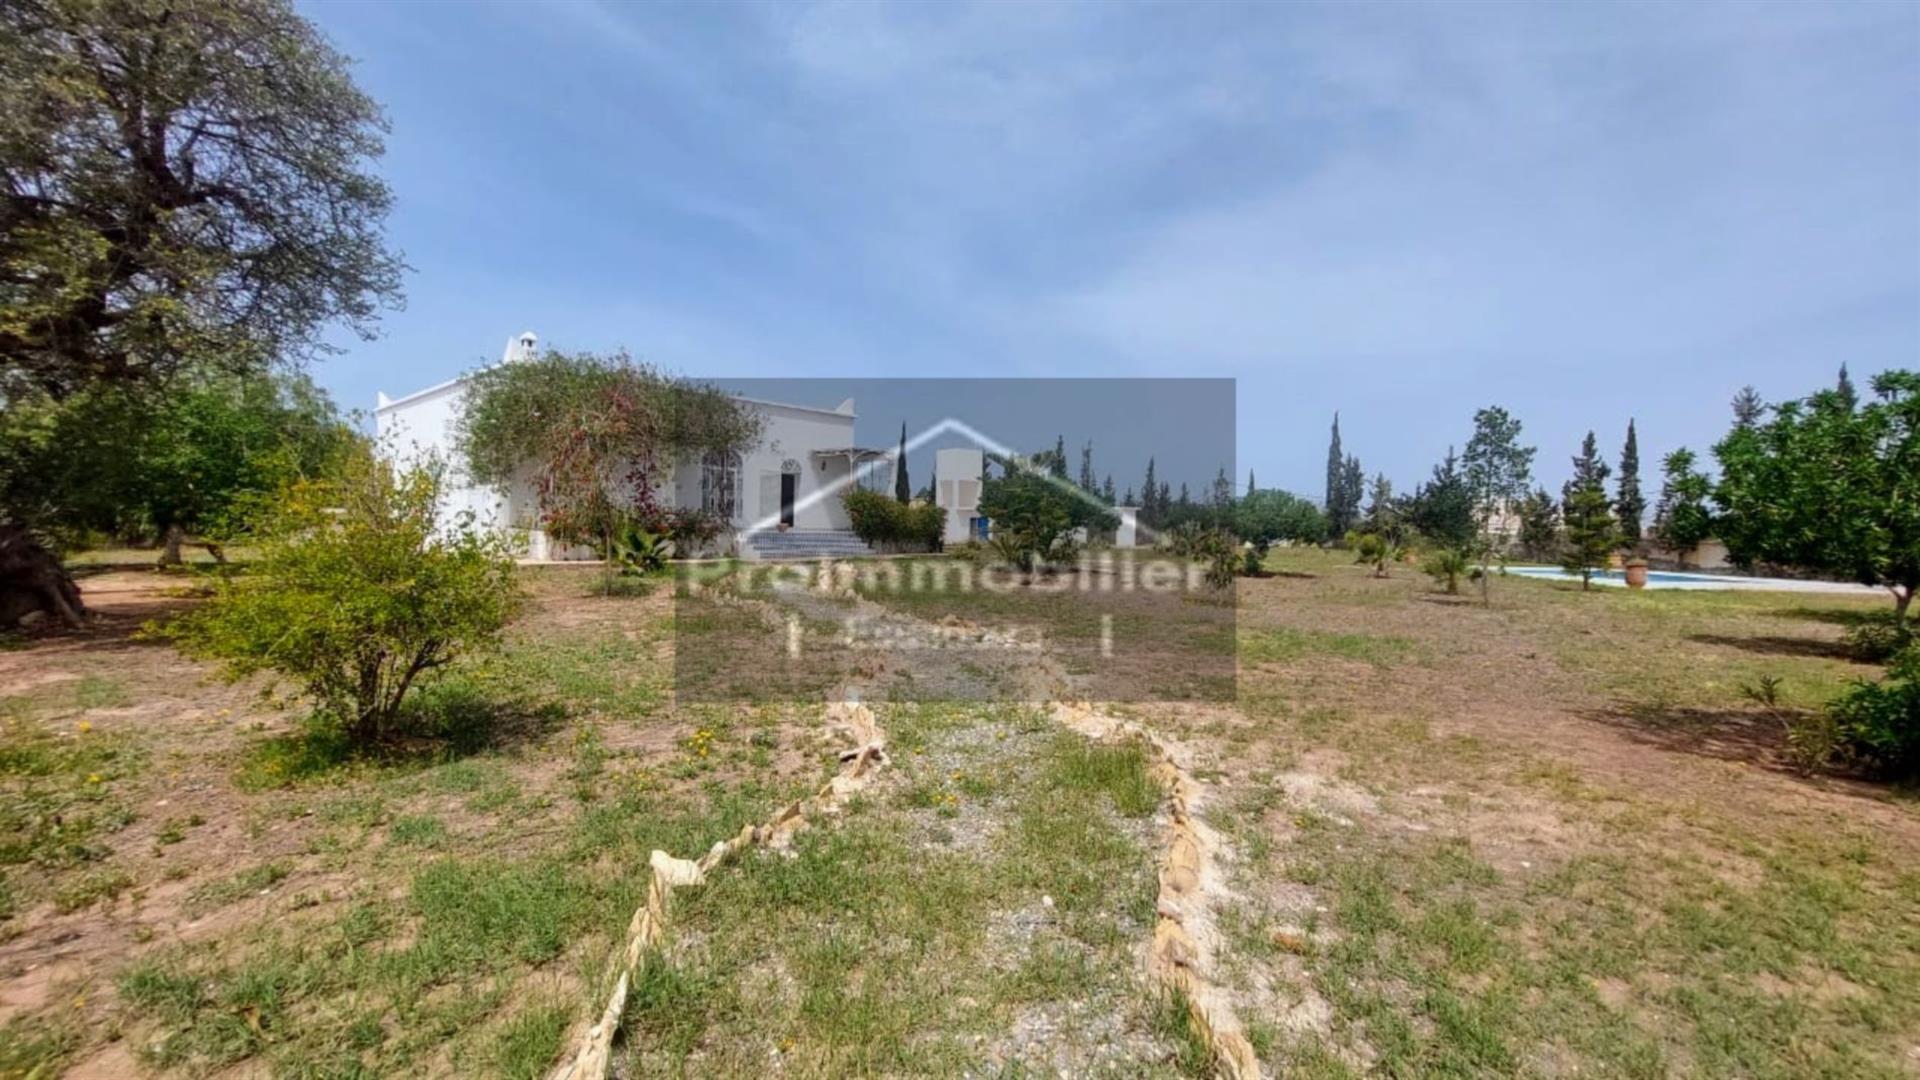 24-04-01-VM Prachtig landhuis van 170 m² te koop in Essaouira Terrein 5226 m²